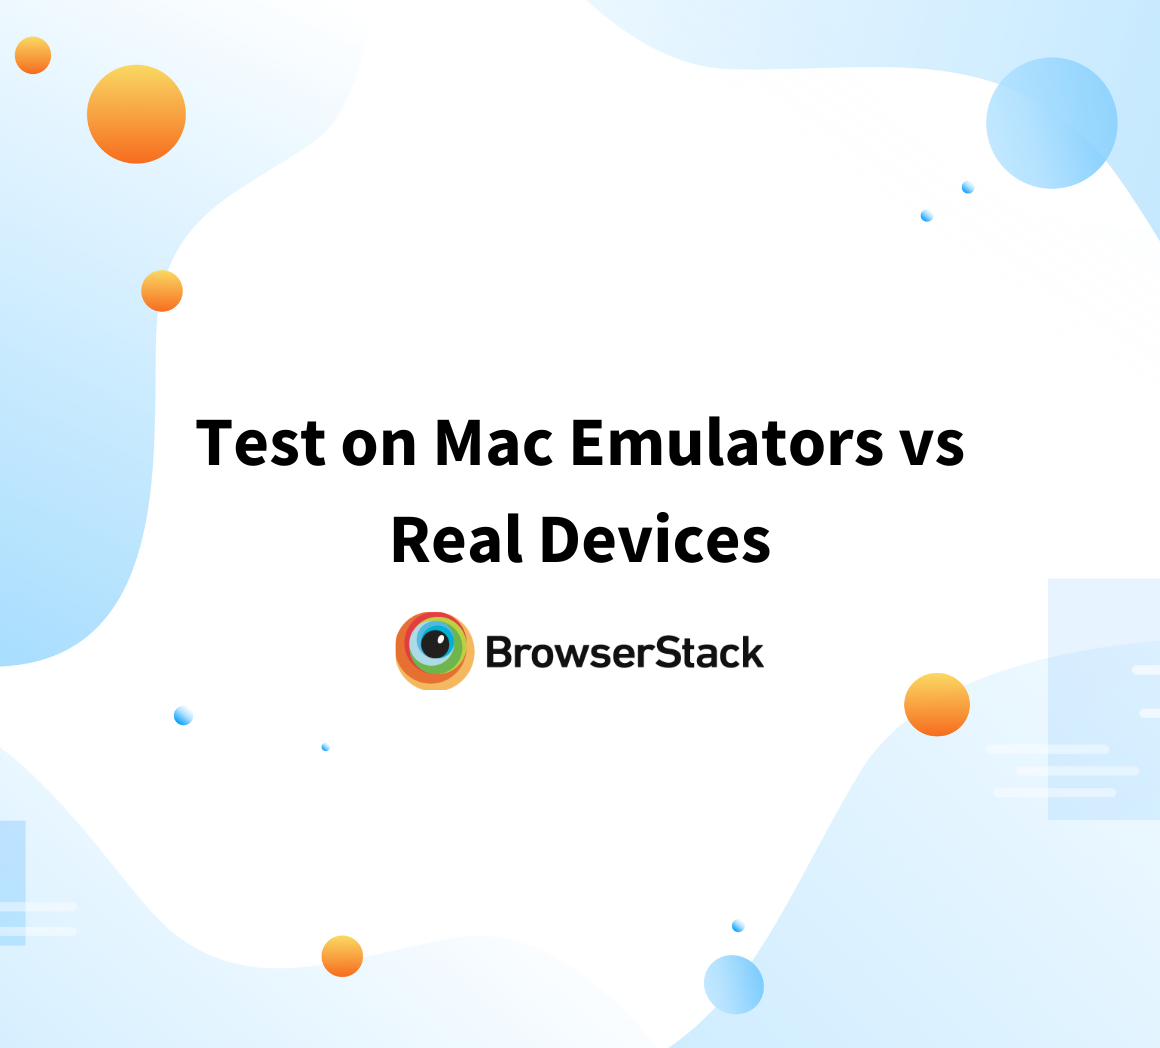 Test on Mac Emulators vs Real Devices